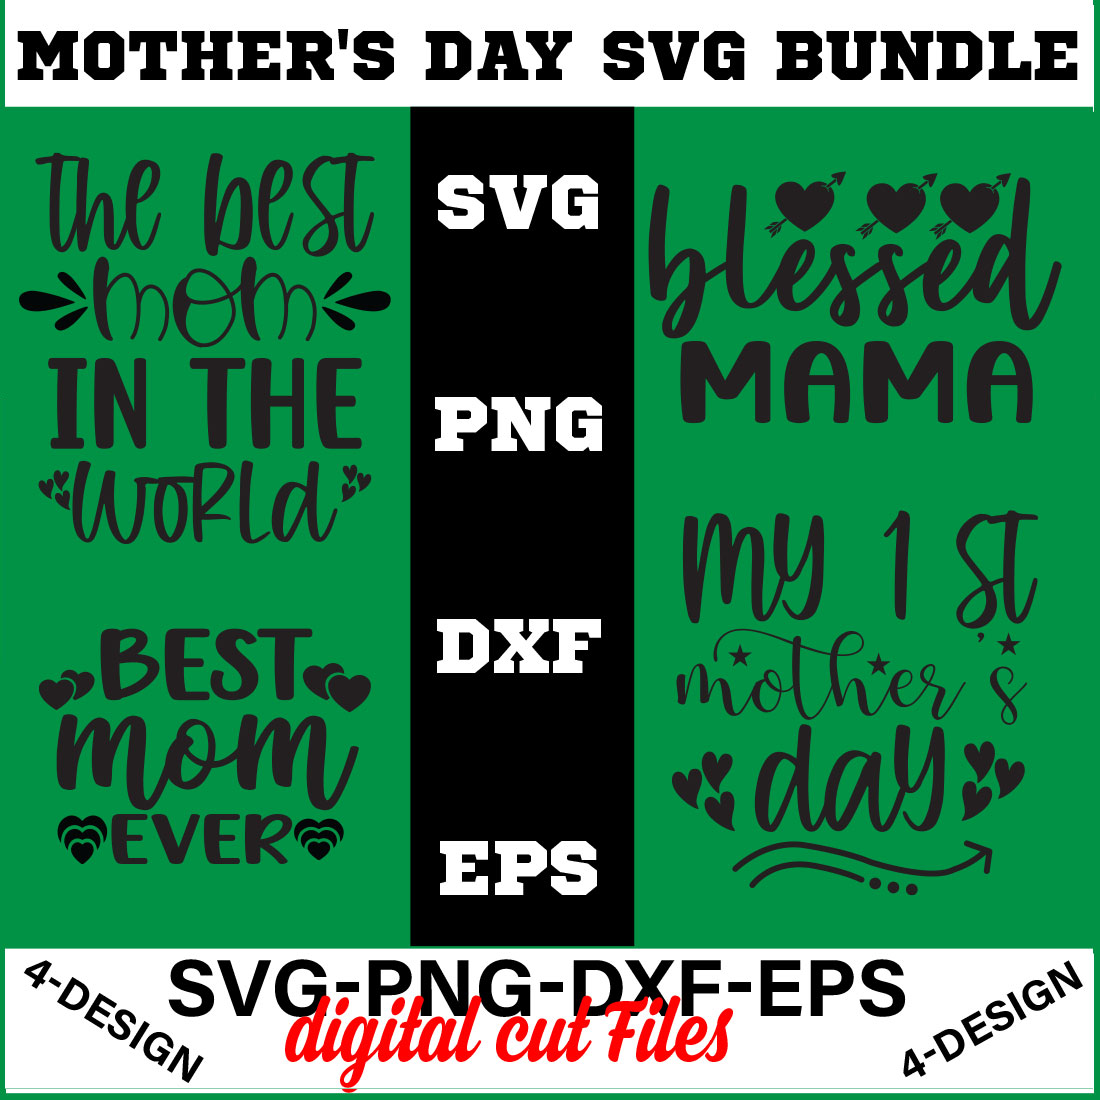 Mothers Day SVG Bundle, mom life svg, Mother's Day, mama svg Volume-07 cover image.